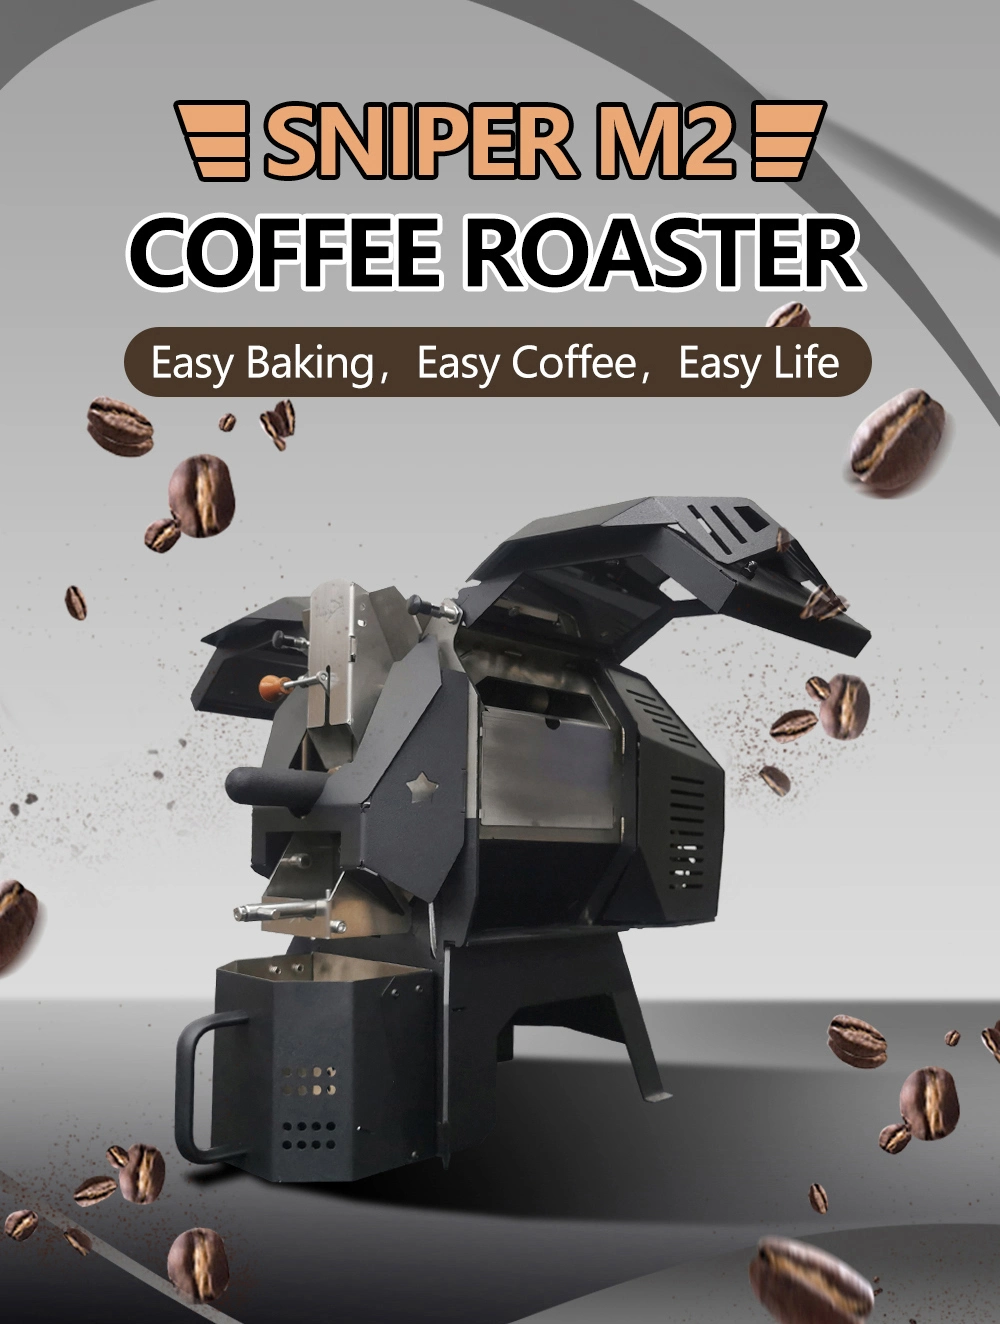 White/Black/Retro Electric Coffee Roaster Used Coffee Roasting Commercial Coffee Roaster